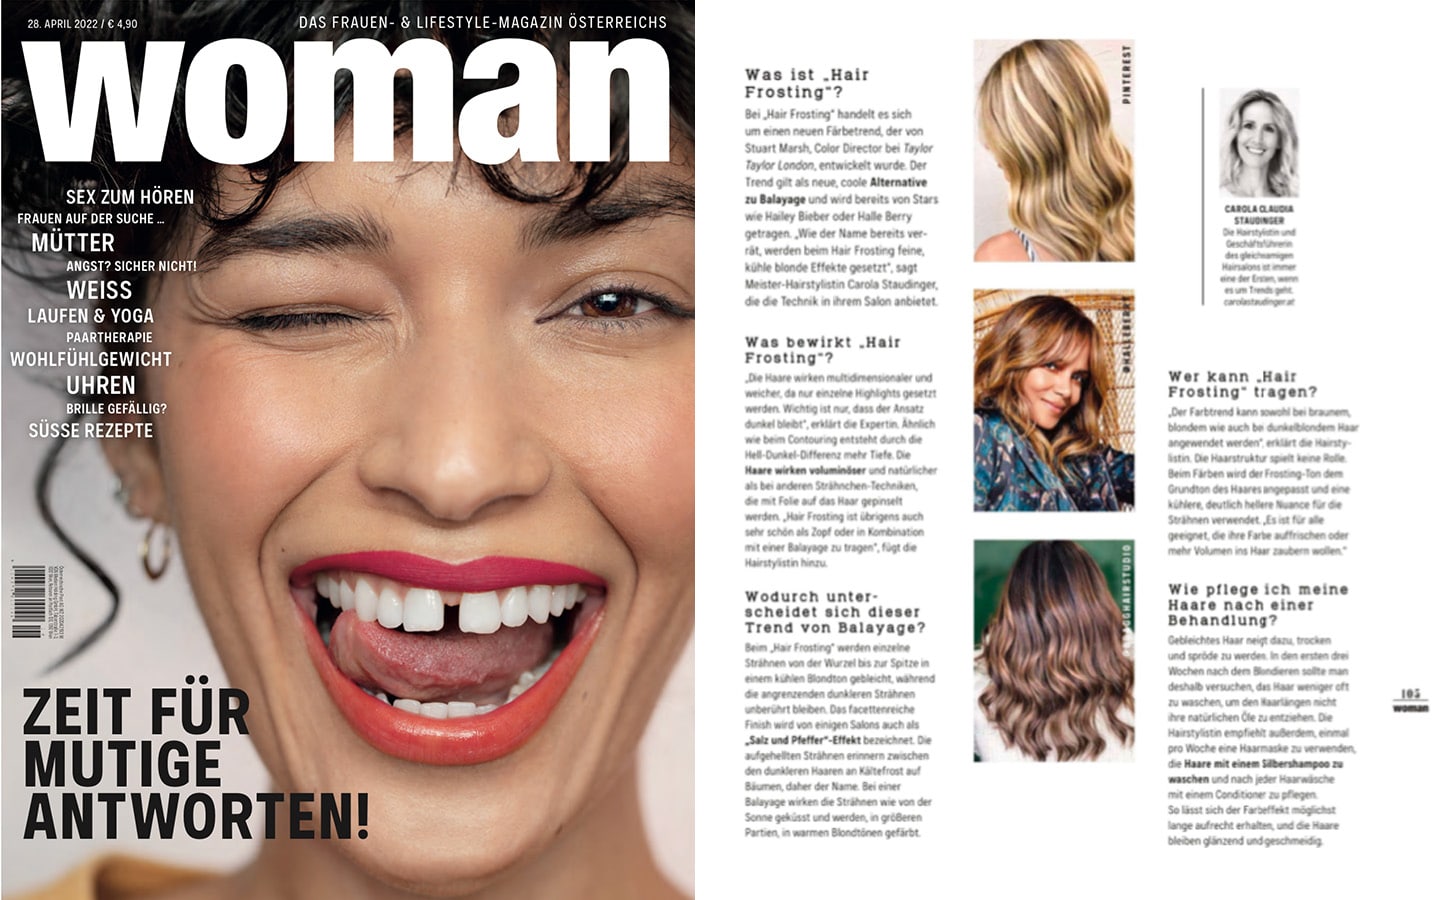 Woman Magazin - Carola Claudia Staudinger Experten Meinung: Was ist Hair Frosting? 